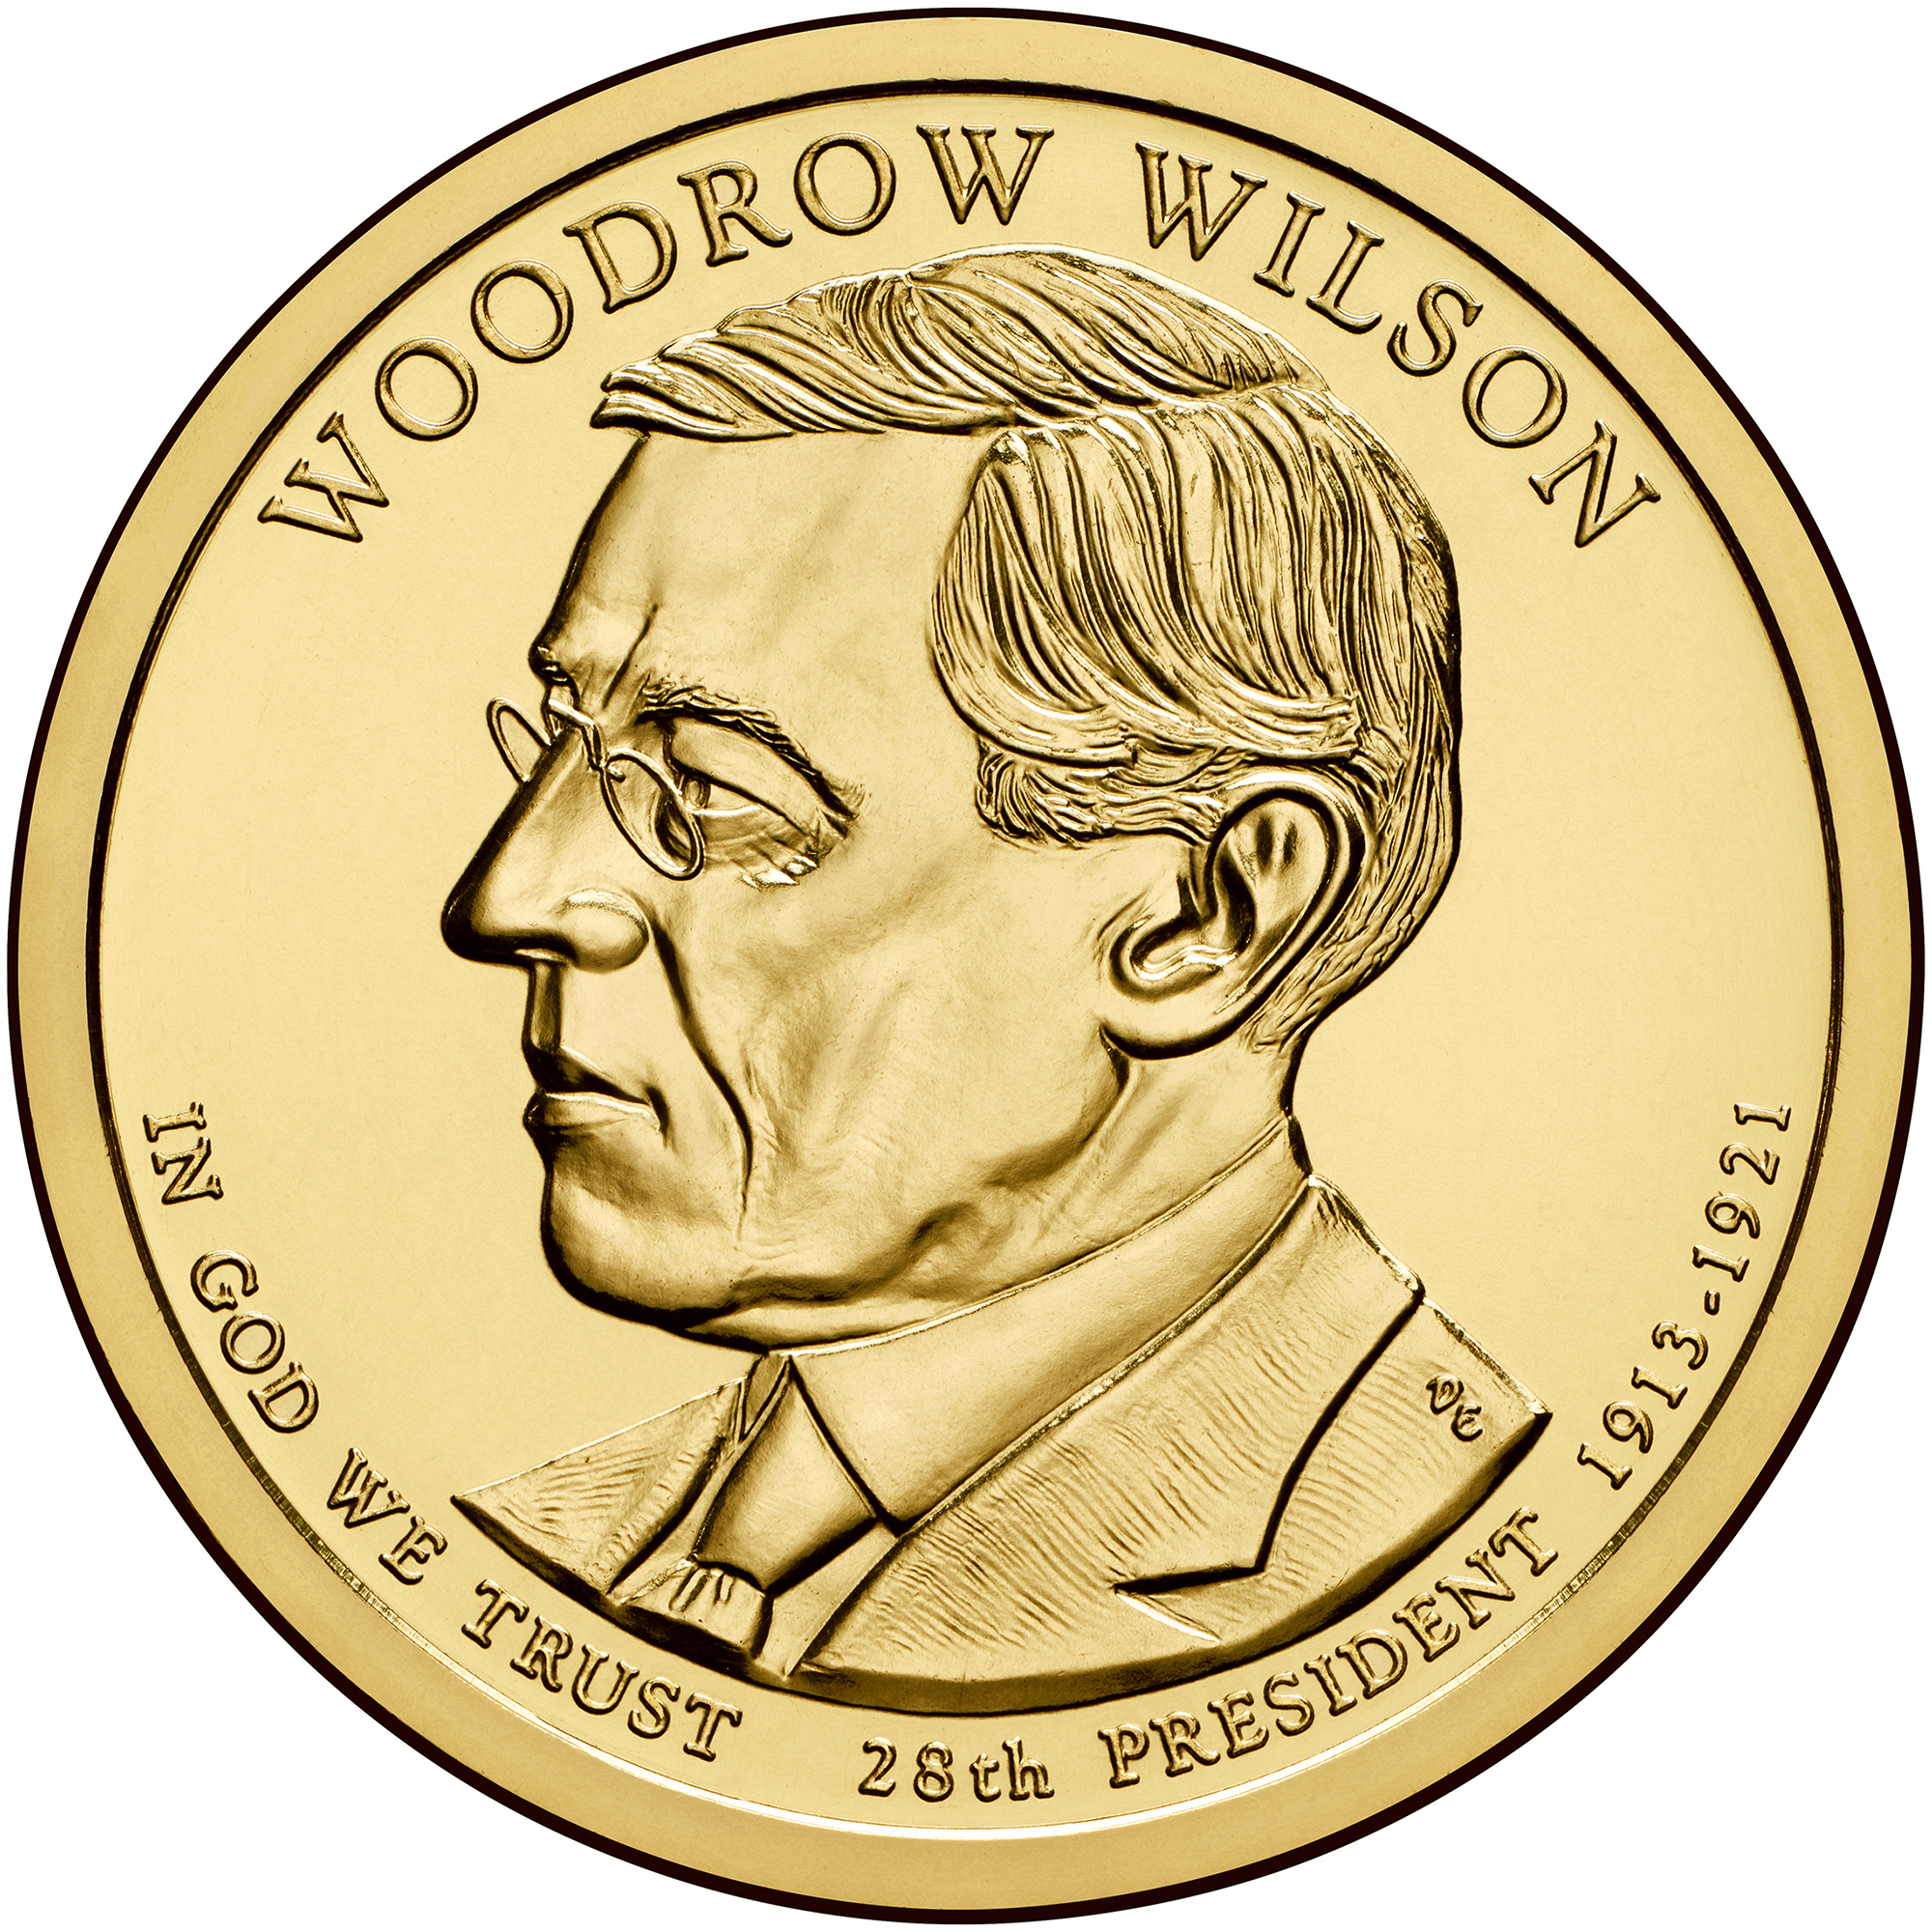 Mint Rolls Money Details about   2013 D Woodrow Wilson Presidential One Dollar Coins U.S 